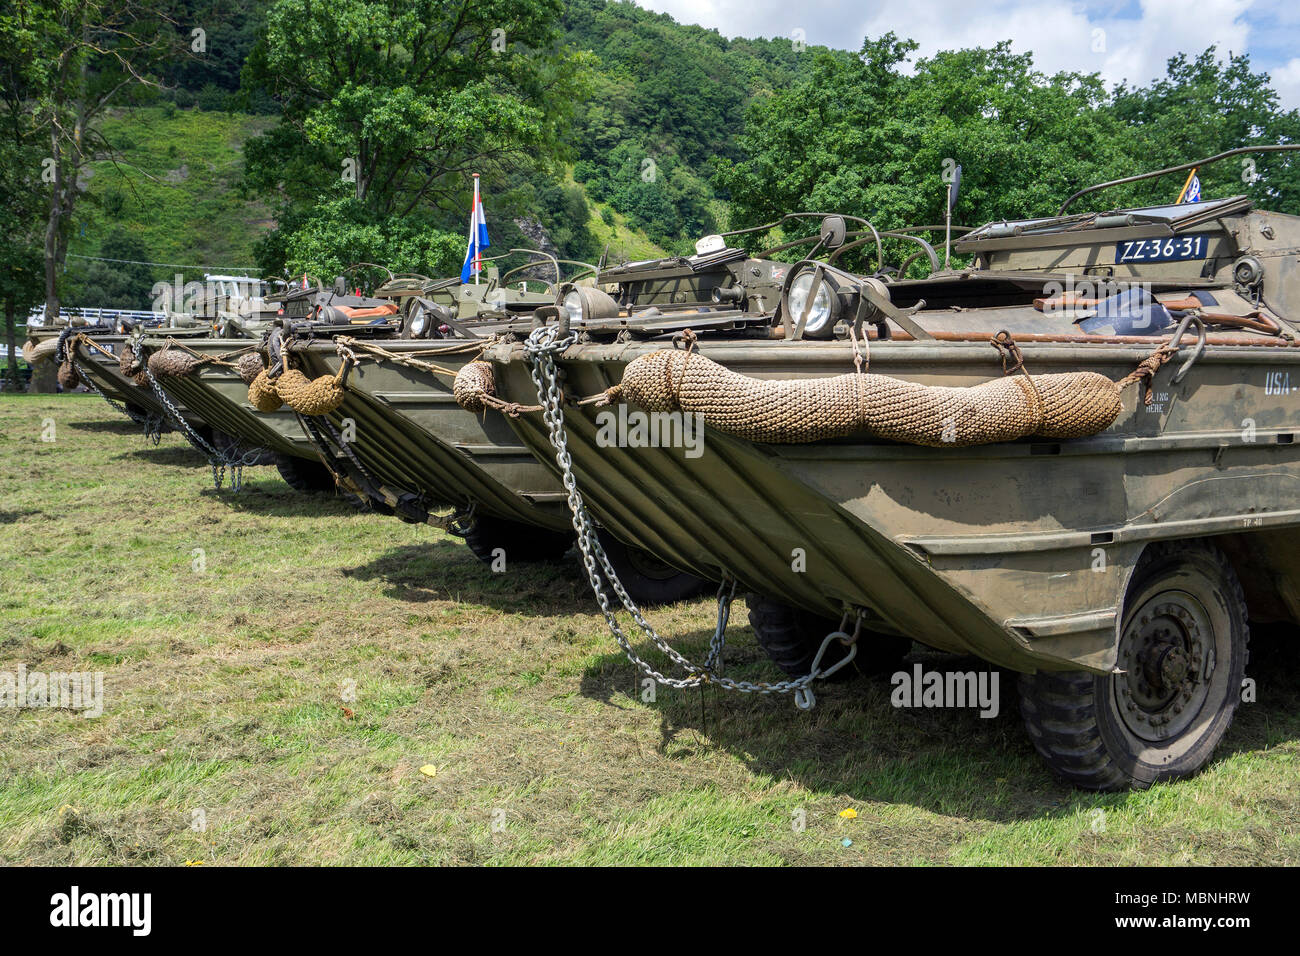 Military amphibious vehicles at Moselle river, Neumagen-Dhron, Rhineland-Palatinate, Germany Stock Photo